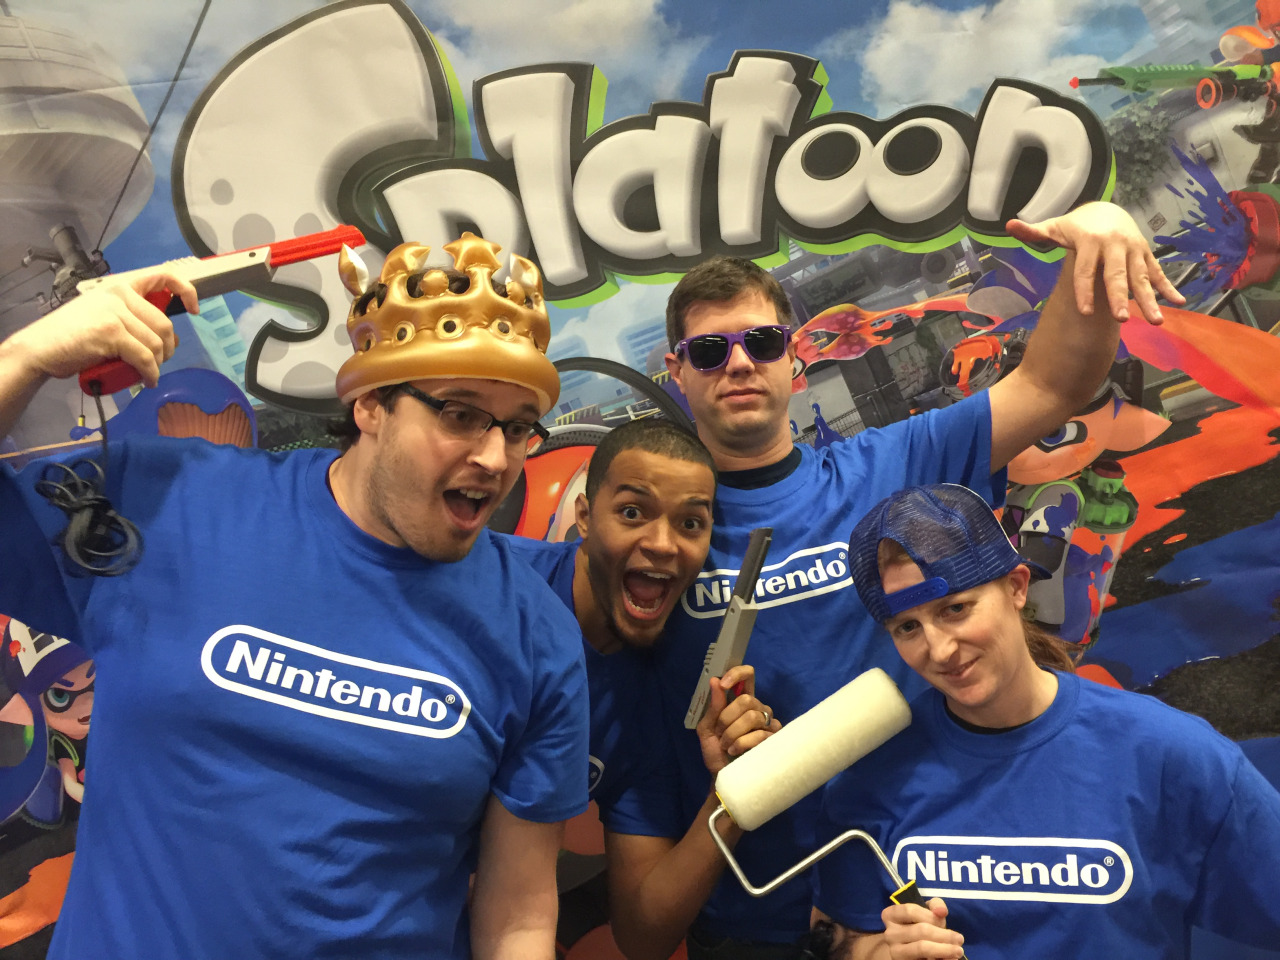 Nintendo Treehouse Splatoon Tournament